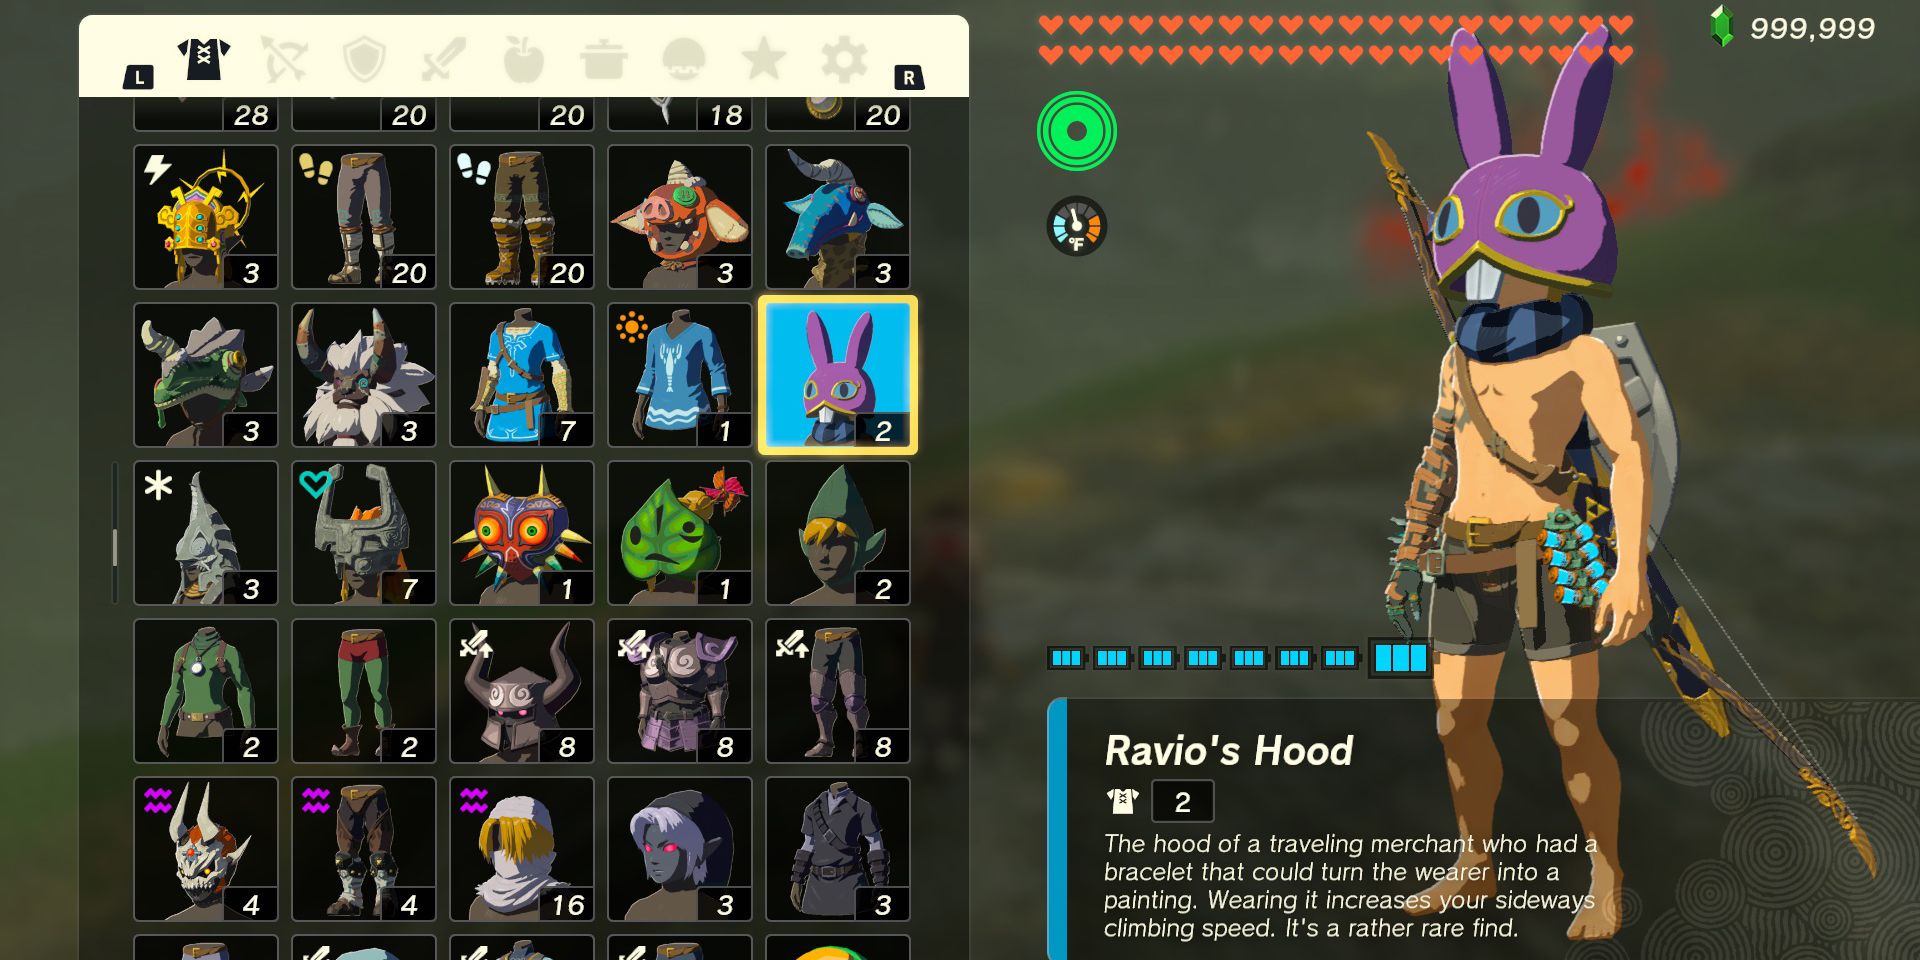 The Ravio's Hood armor piece in The Legend of Zelda: Tears of the Kingdom